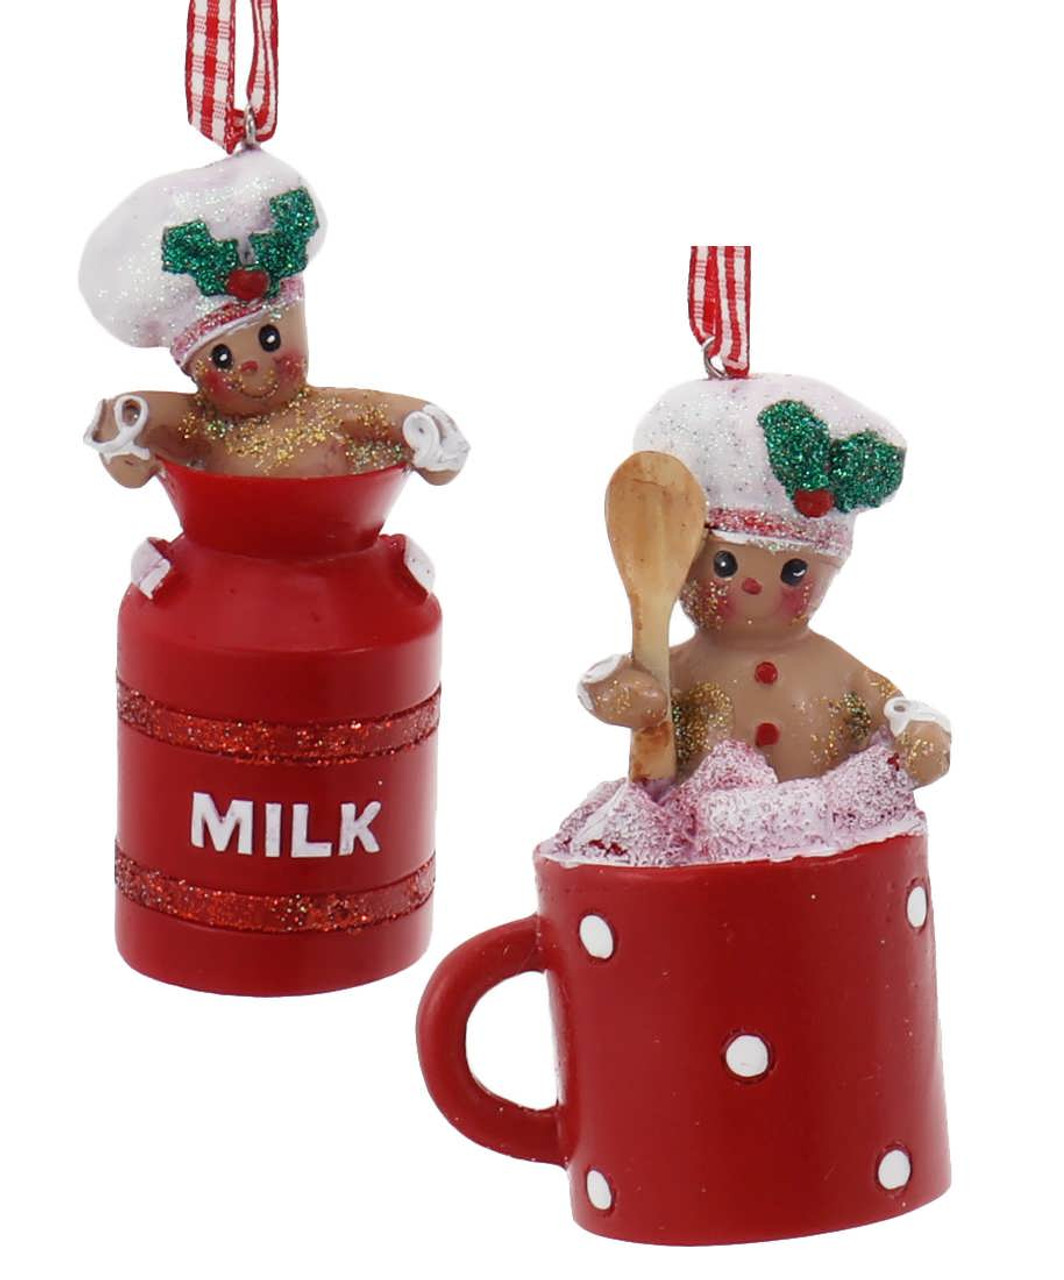 Gingerbread Mug Set of 2